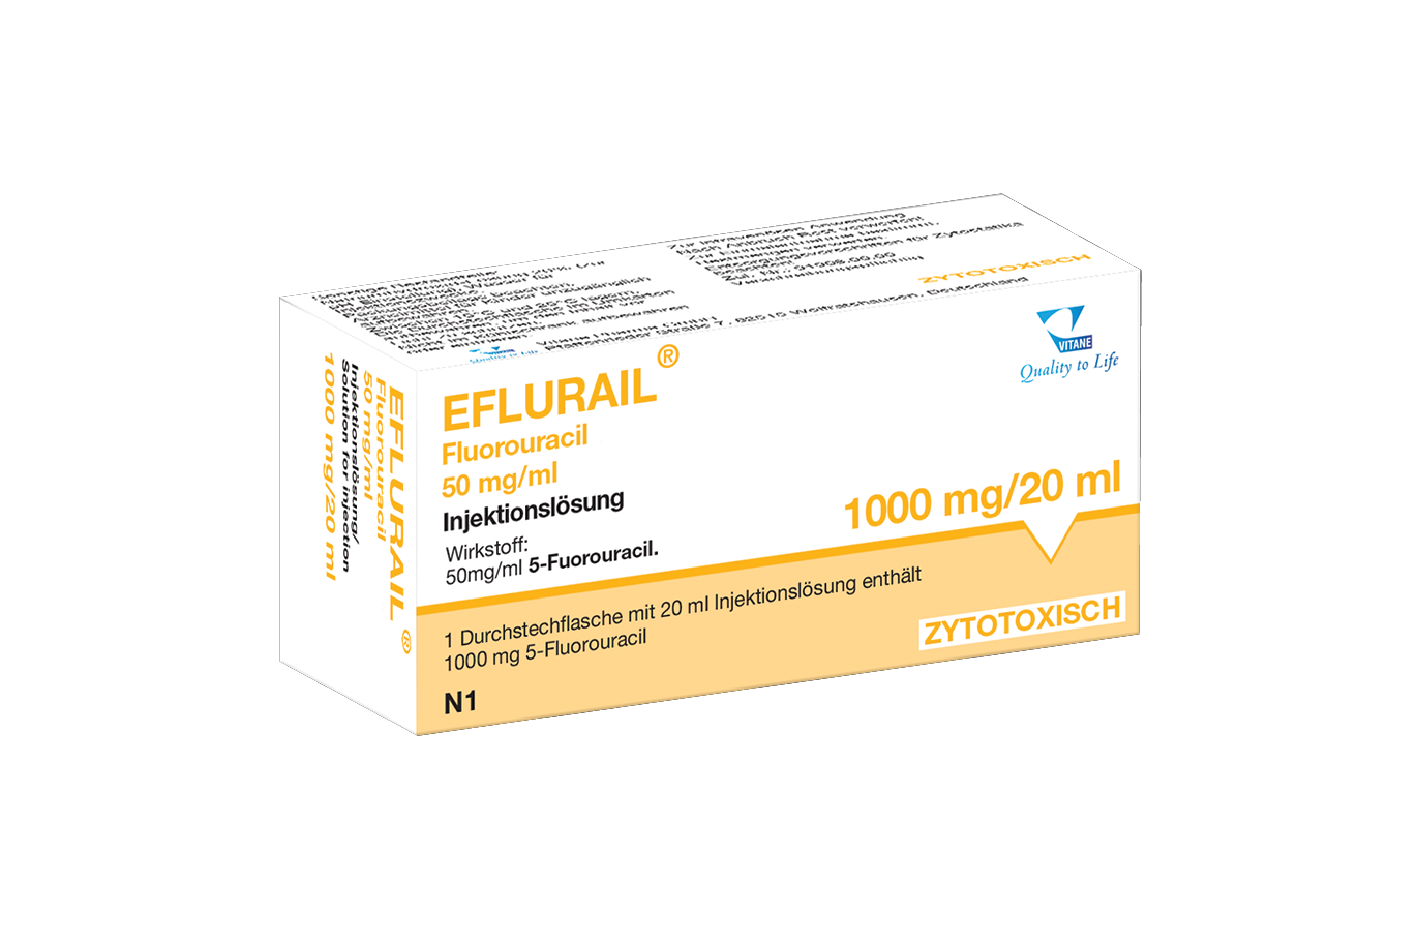 EFLURAIL - 5-Fluorouracil Vitane 50mg/ml